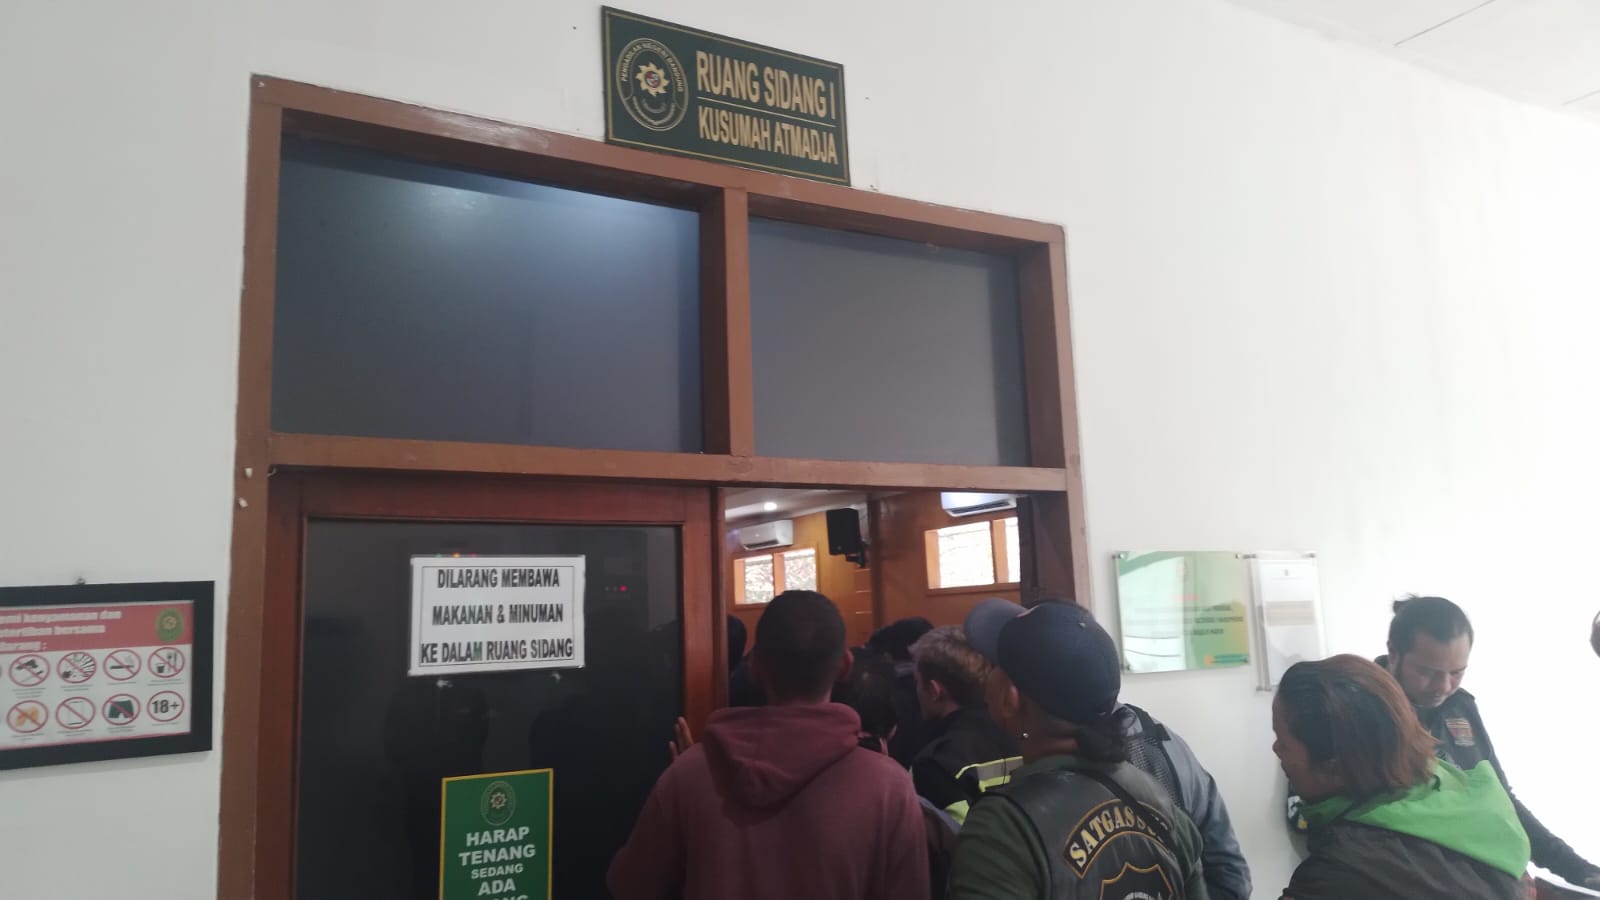 Puluhan driver ojek online (ojol) penuhi ruang sidang di Pengadilan Negeri Bandung, dukung para korban dan saksi dalam perkara bentrokan dengan debtcollector. (Yanuar/Jabar Ekspres)